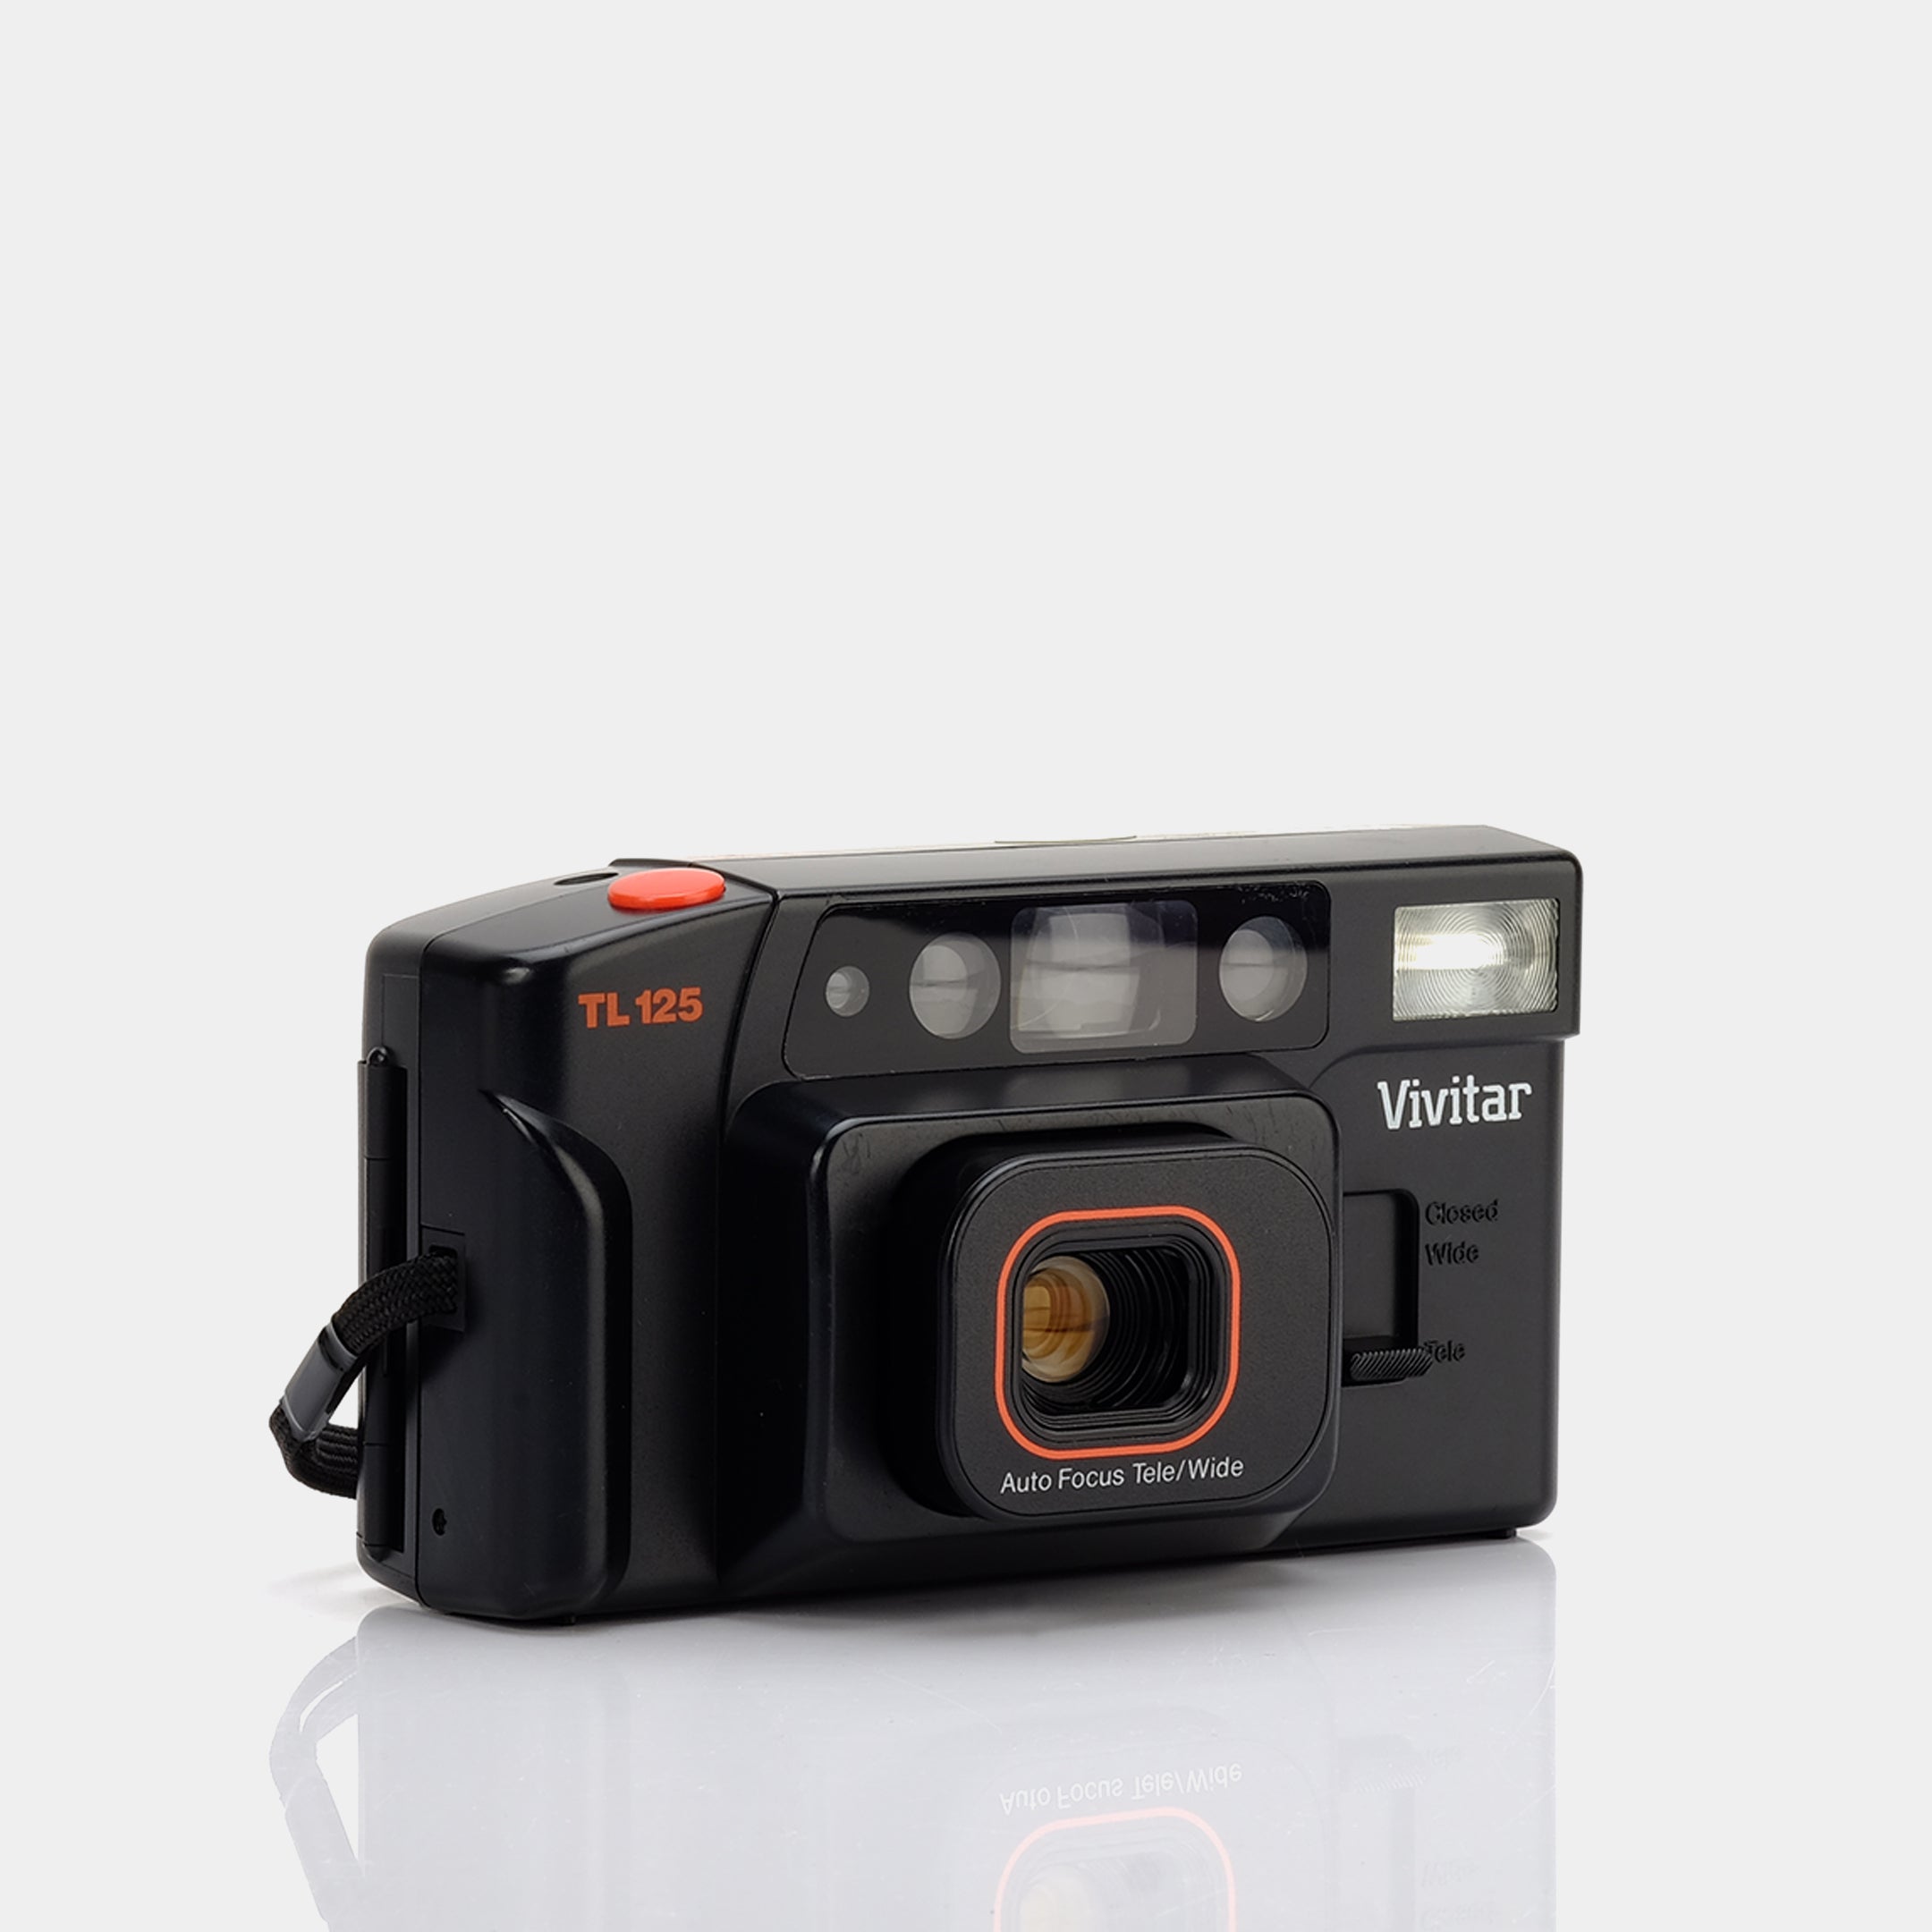 Vivitar TL 125 35mm Point and Shoot Film Camera